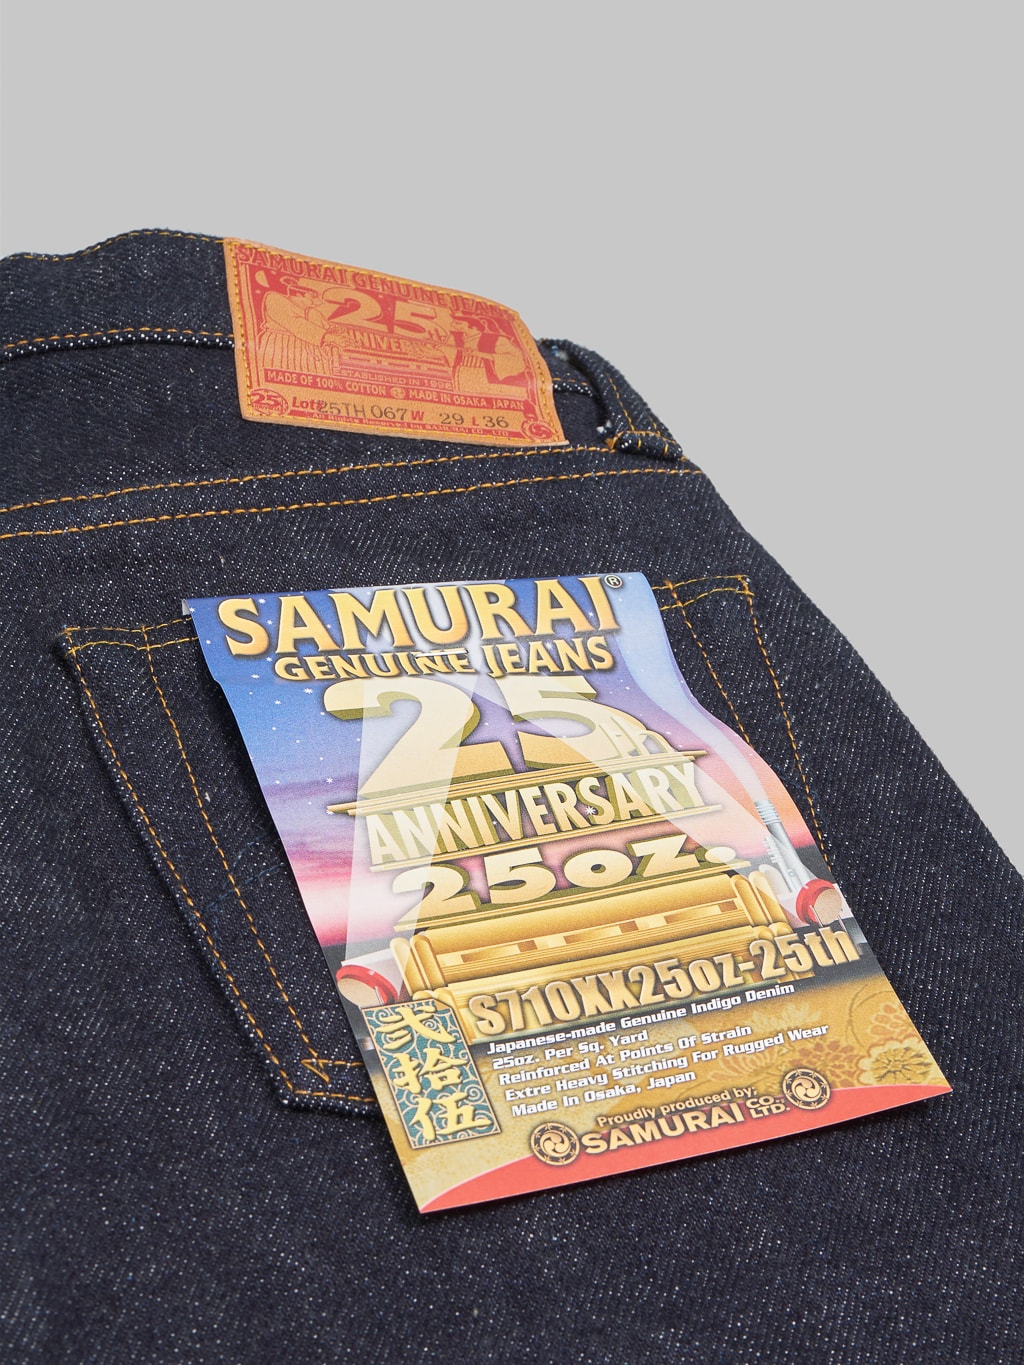 samurai jeans s710xx 25oz 25th anniversary selvedge jeans original artwork